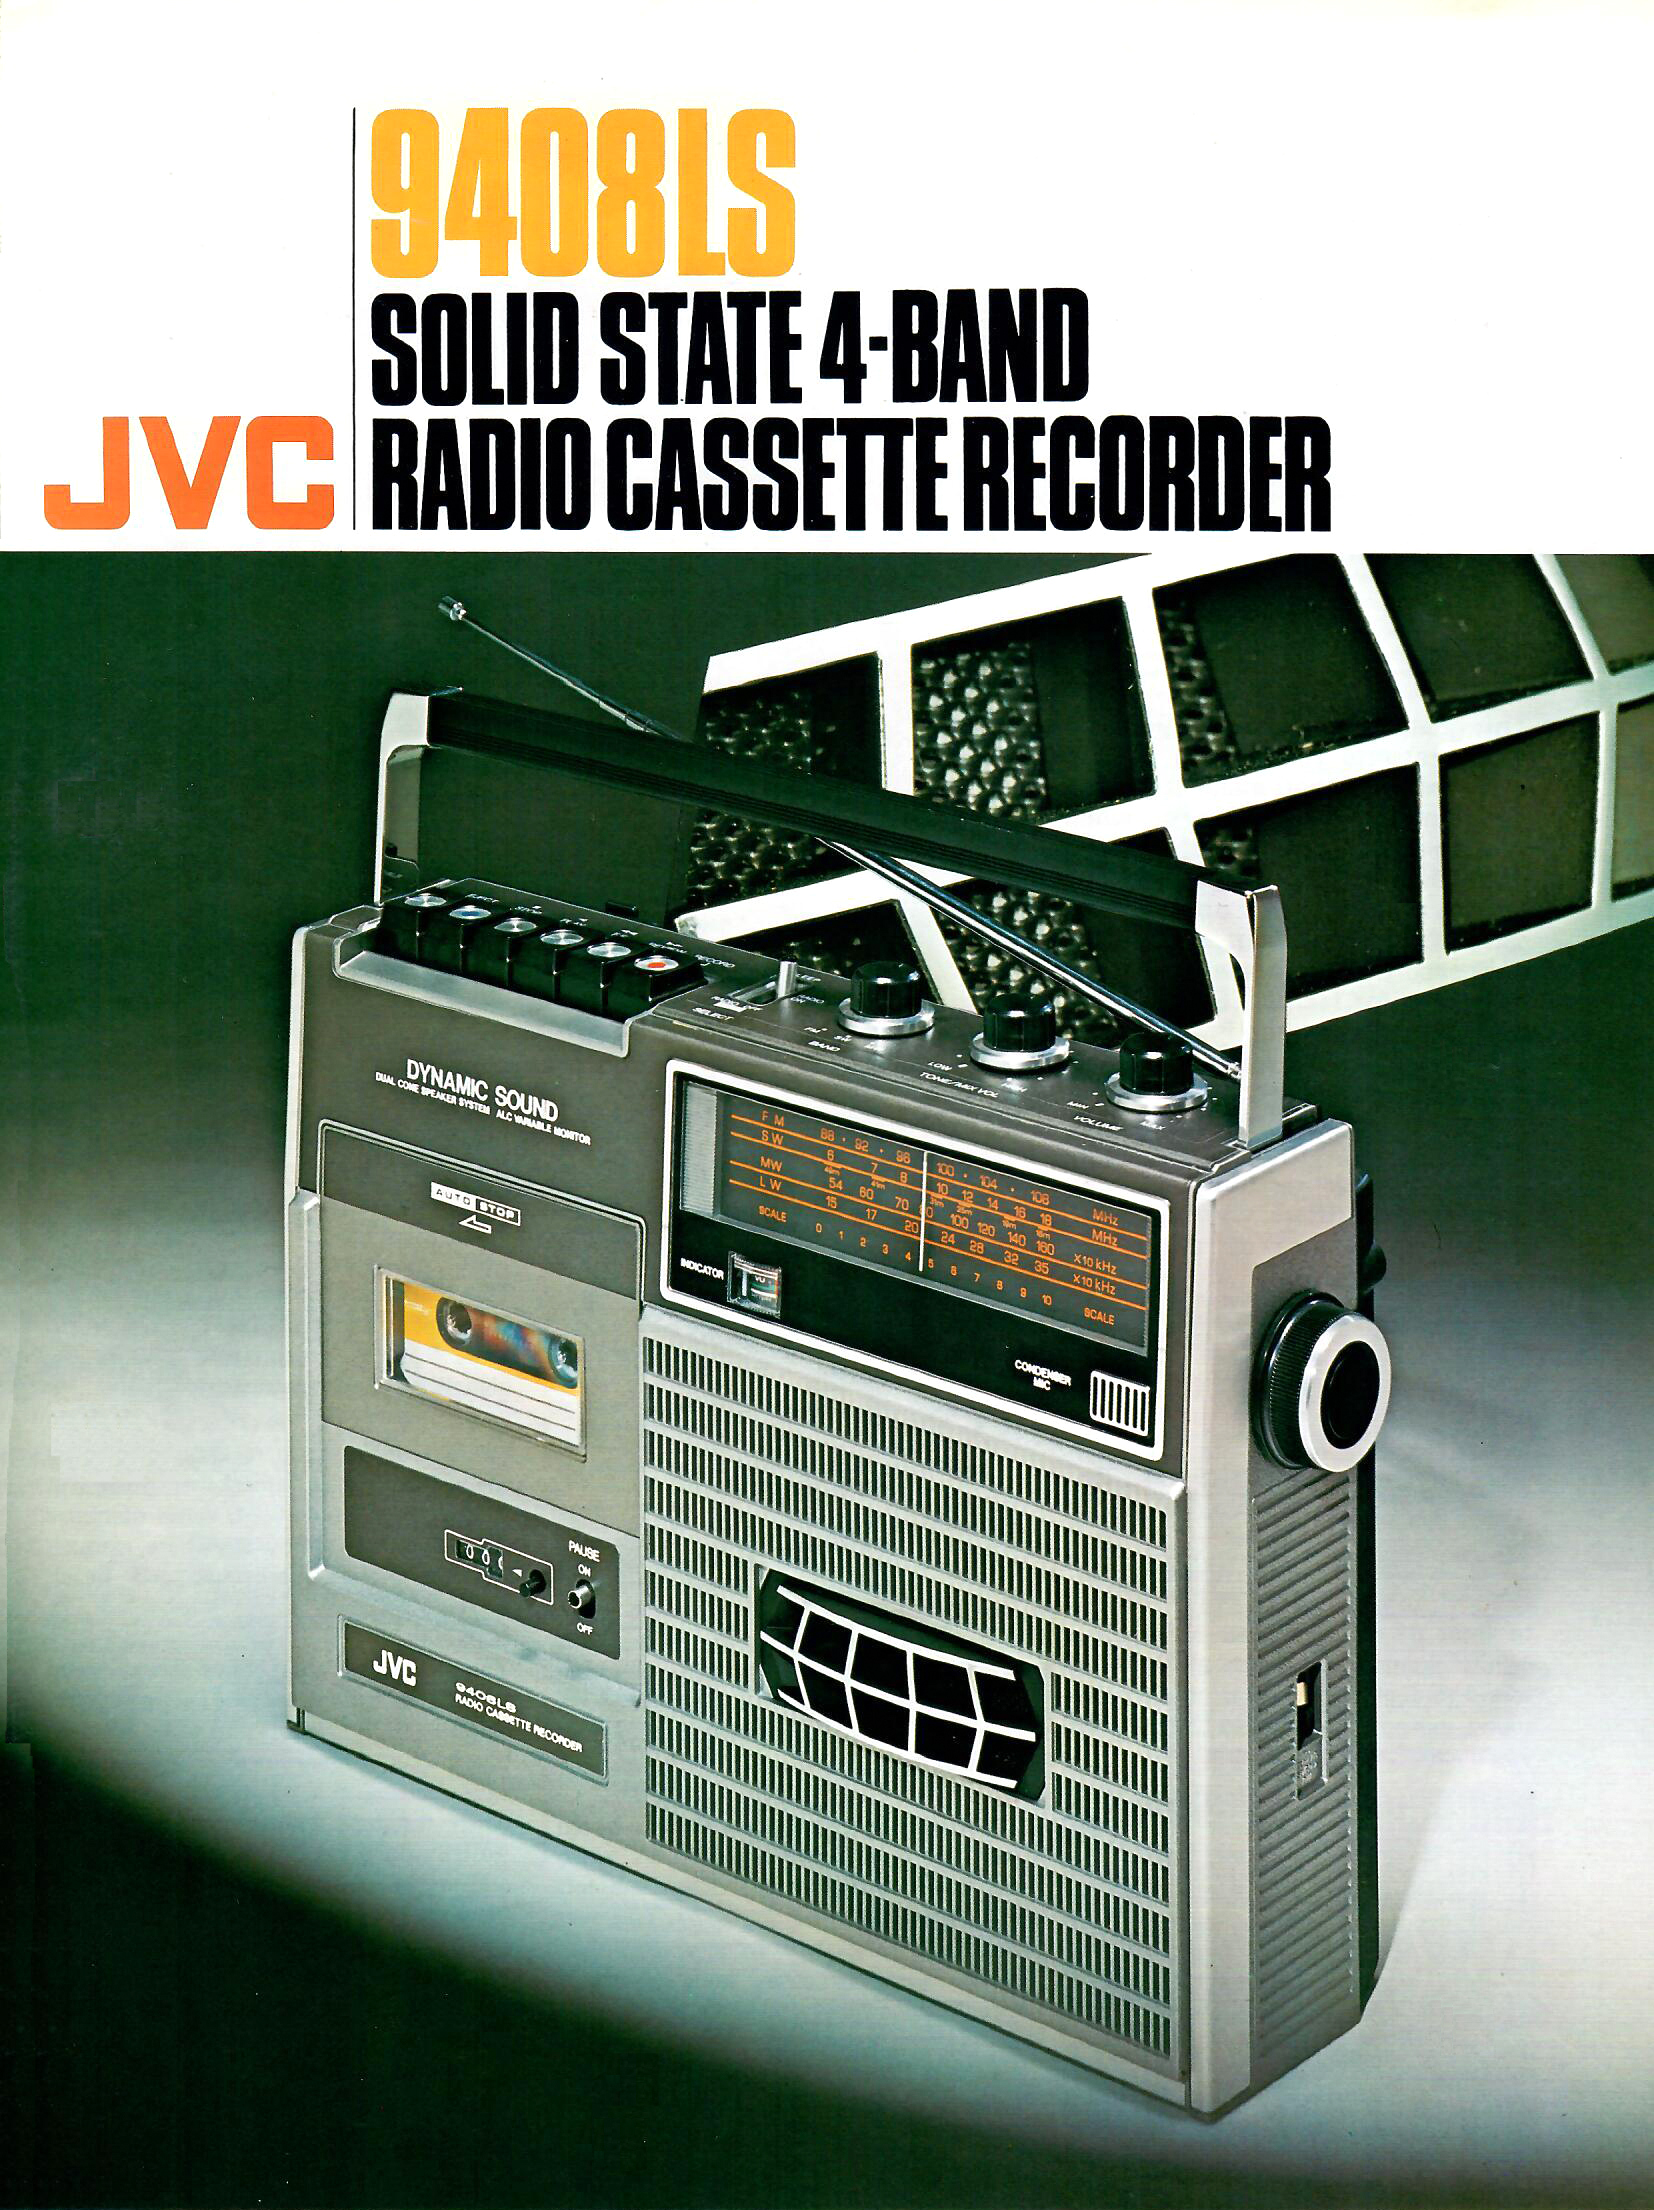 JVC 9408 LS-Prospekt-1976.jpg